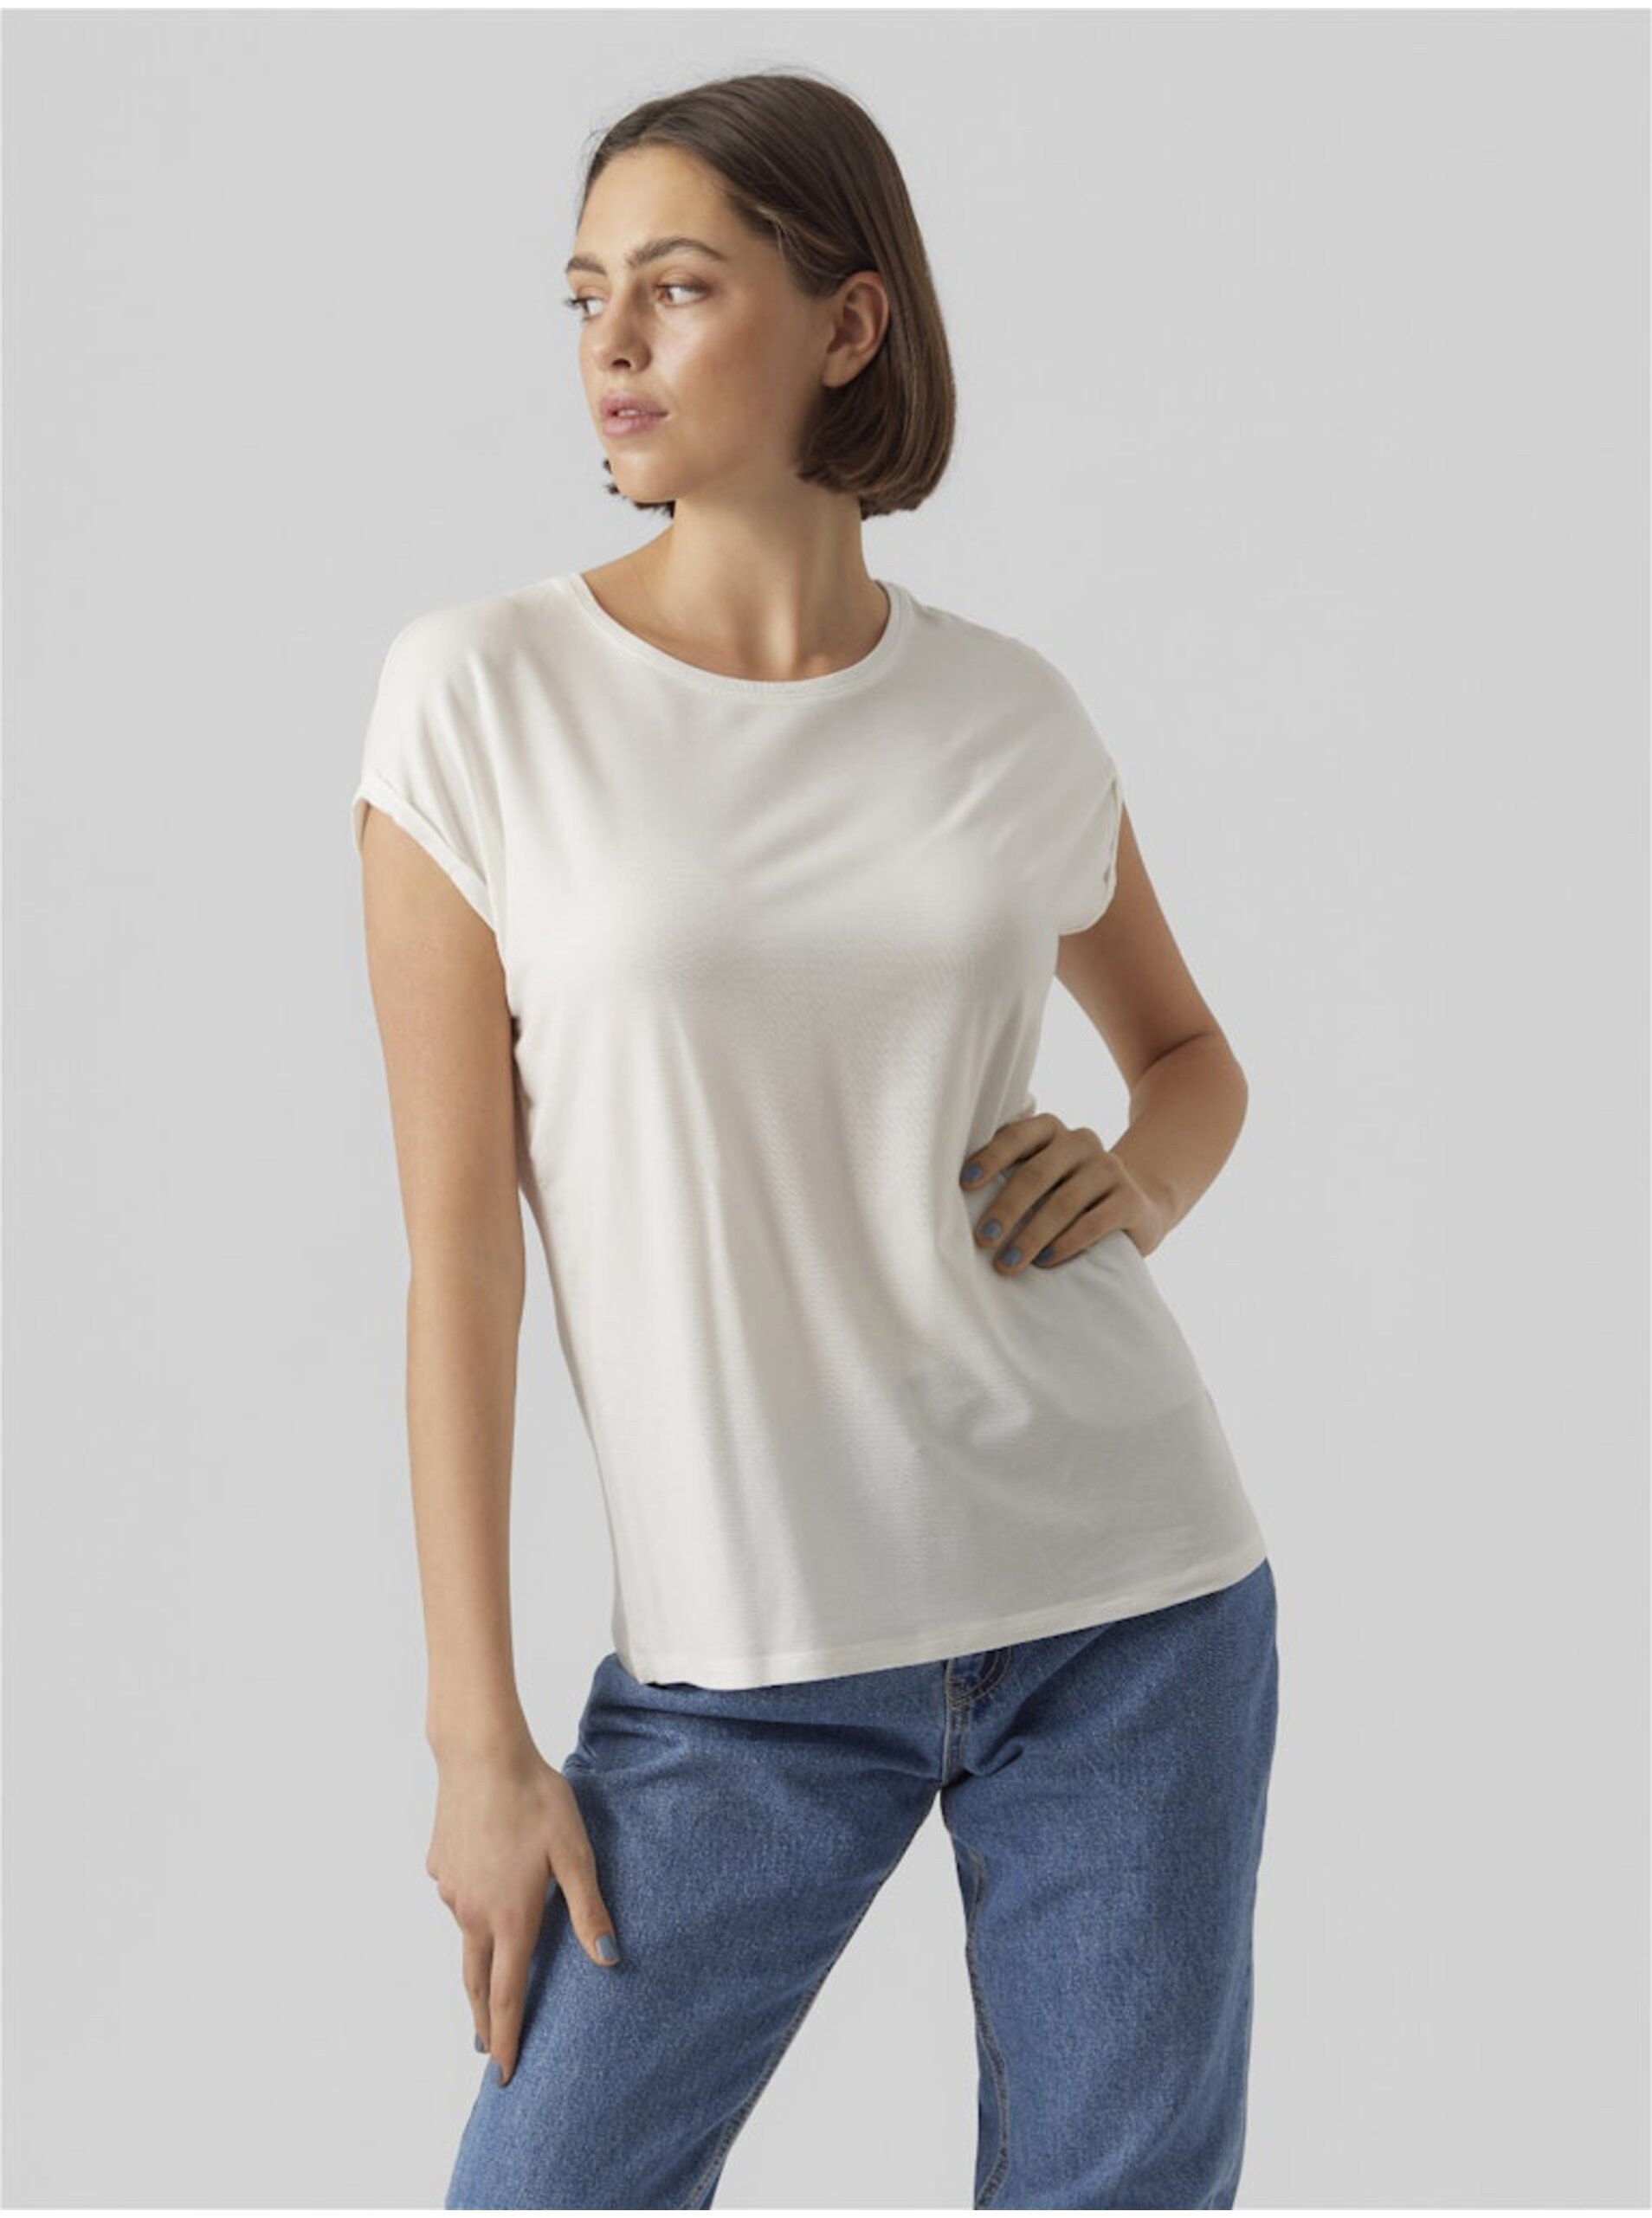 White women's T-shirt Vero Moda Ava - Women